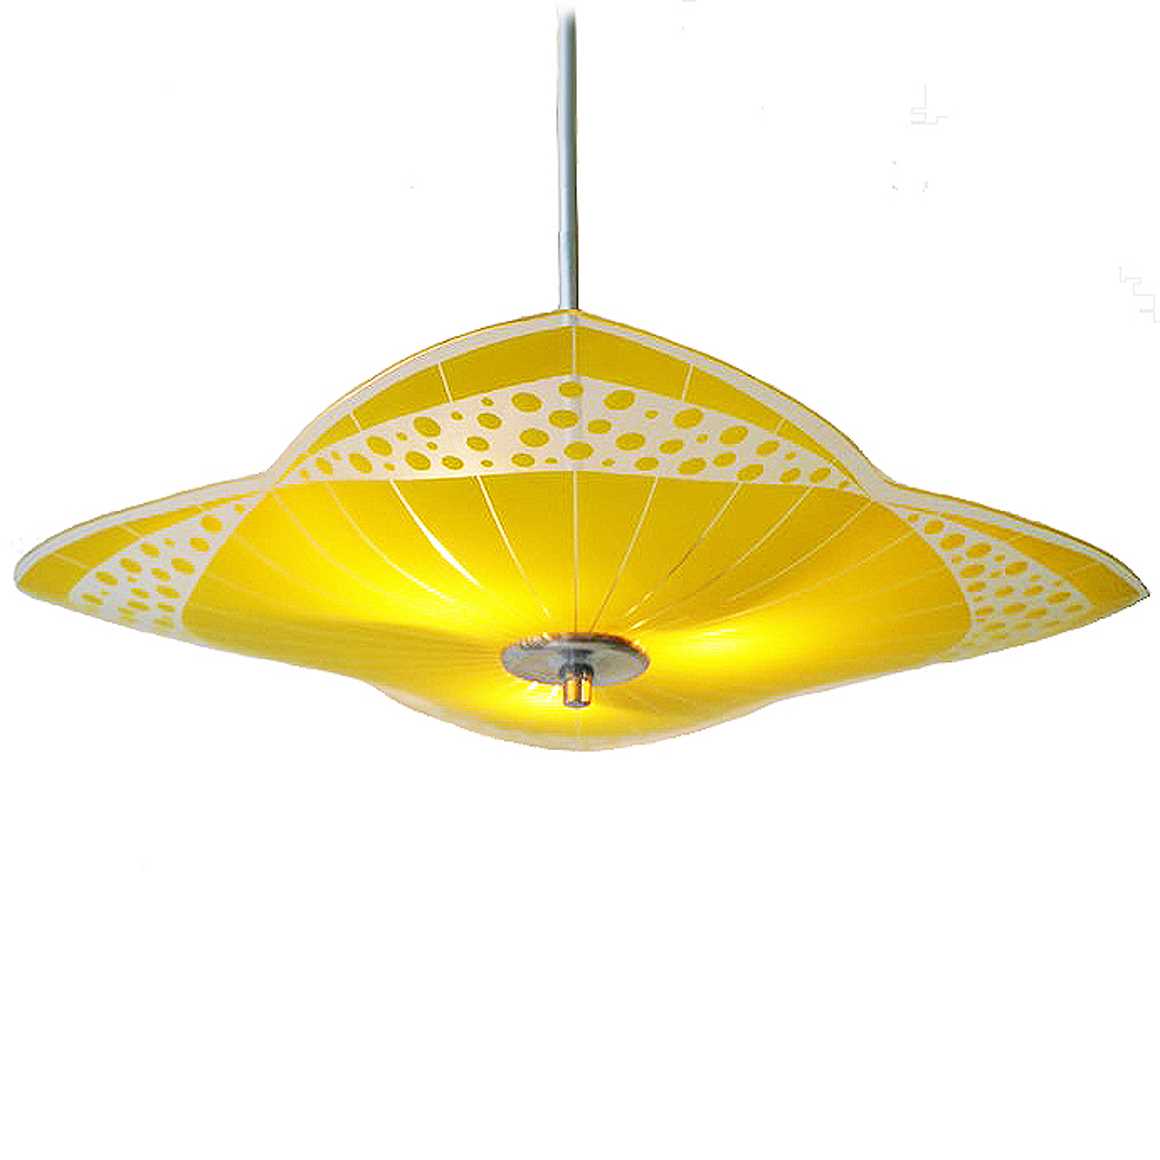 NAPAKO glass pendant lamp yellow & clear big flat disc aluminium rod canopy 1950s 1960s Czech Republic